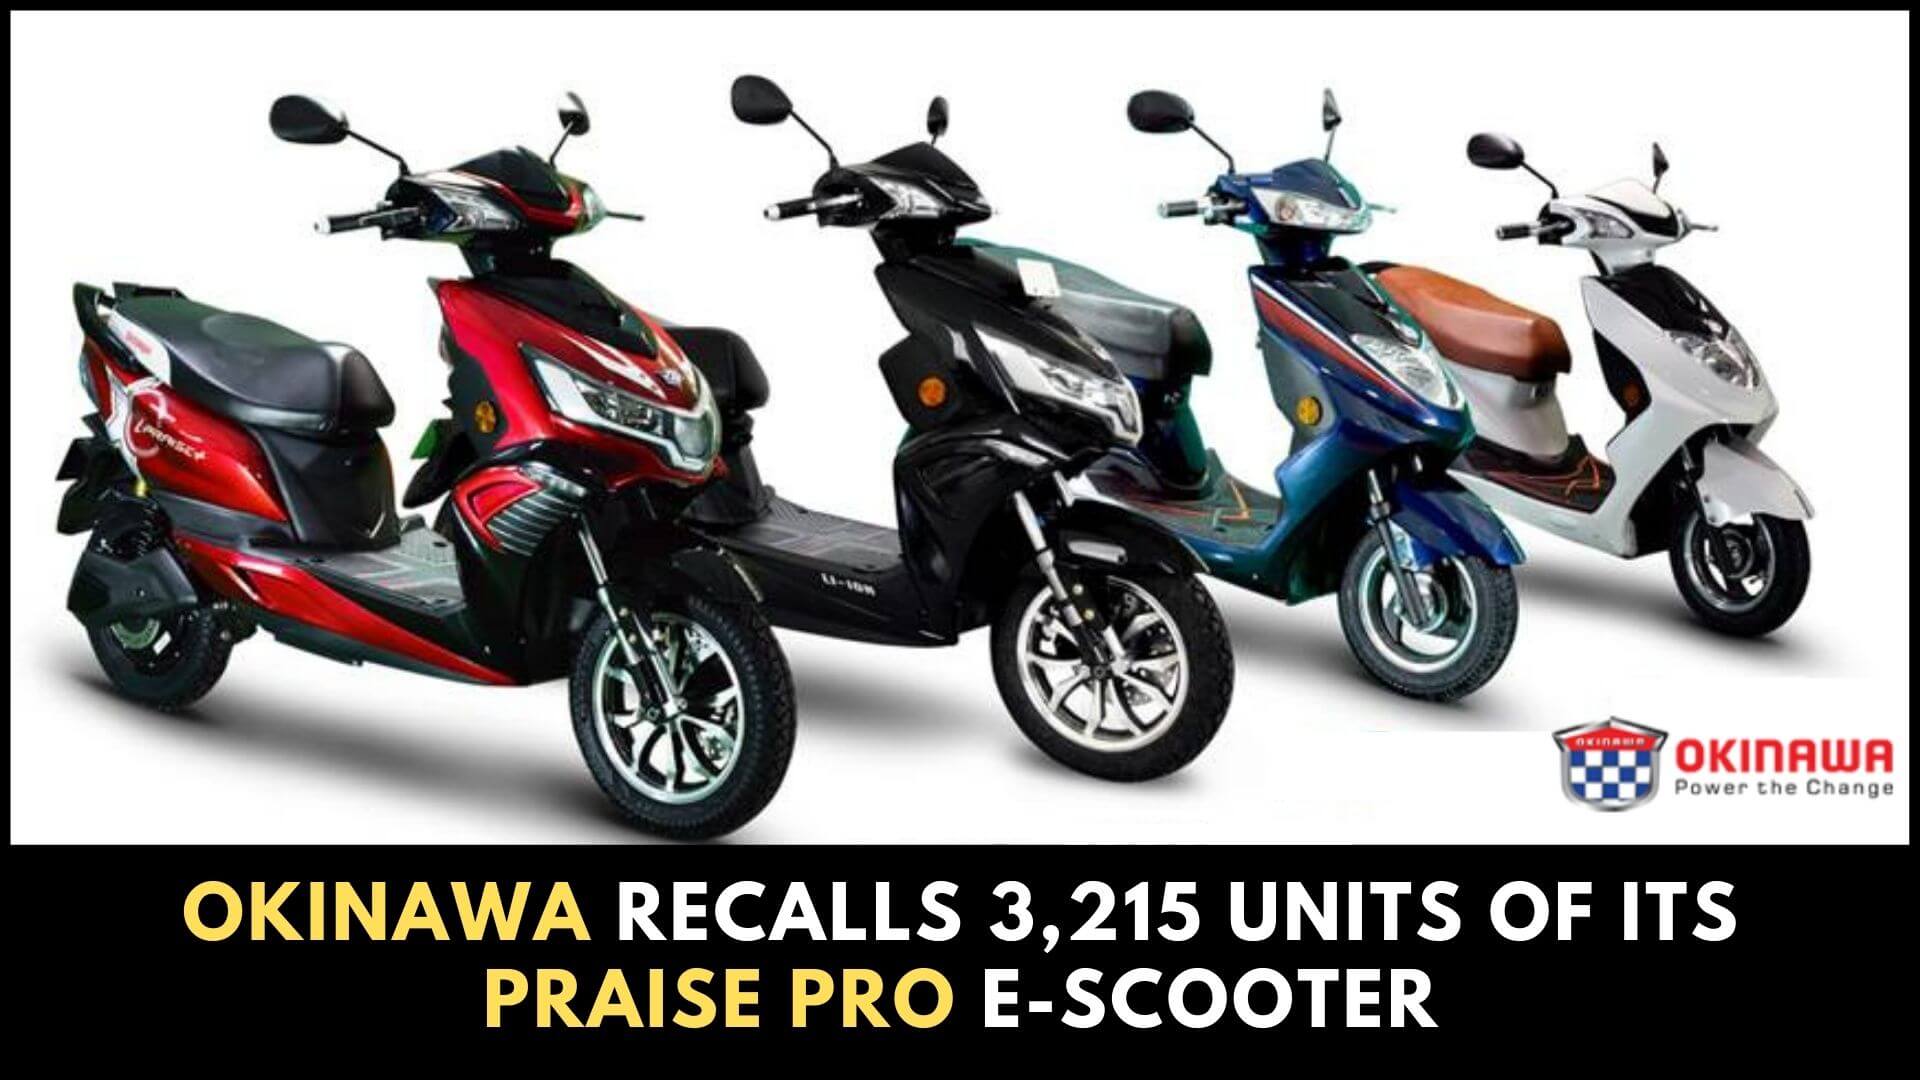 https://e-vehicleinfo.com/why-okinawa-recalls-3215-units-of-its-praise-pro-e-scooter/